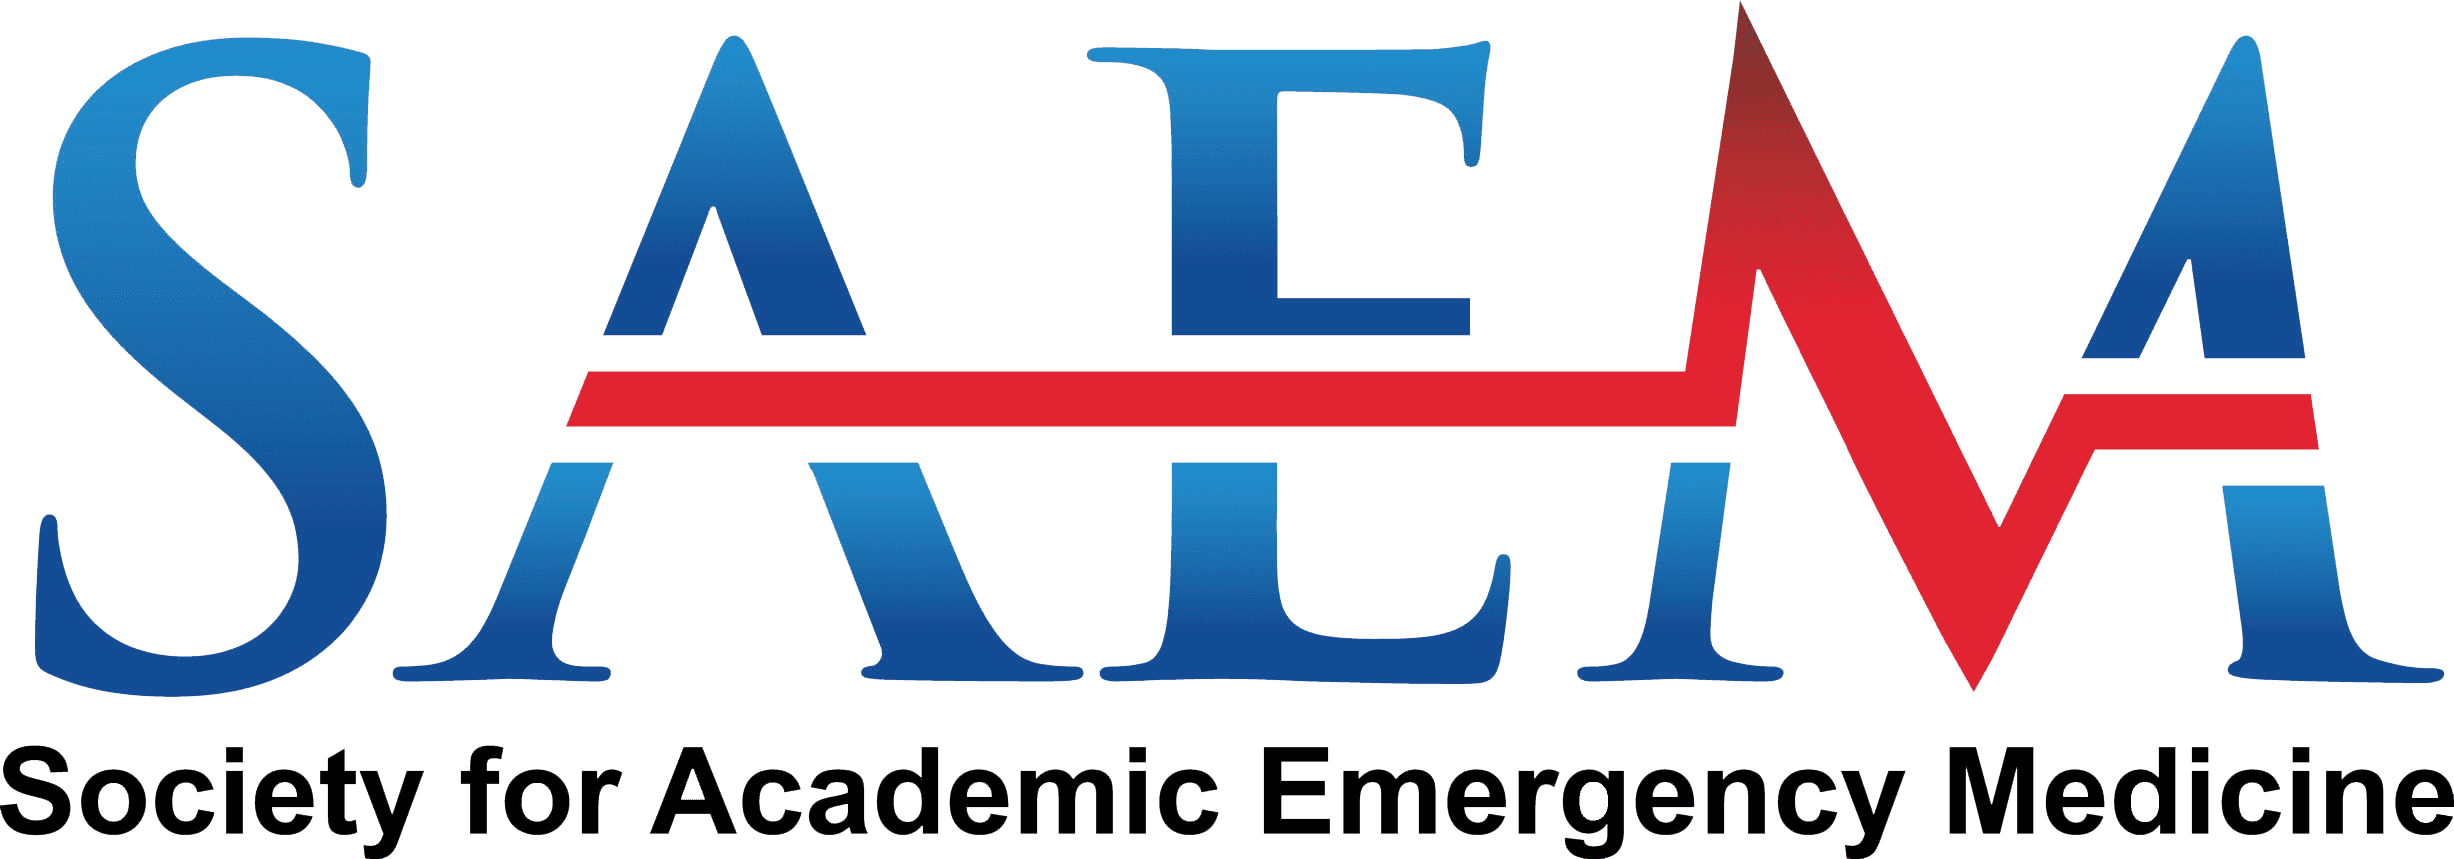 Society for Academic Emergency Medicine Logo | SAEM